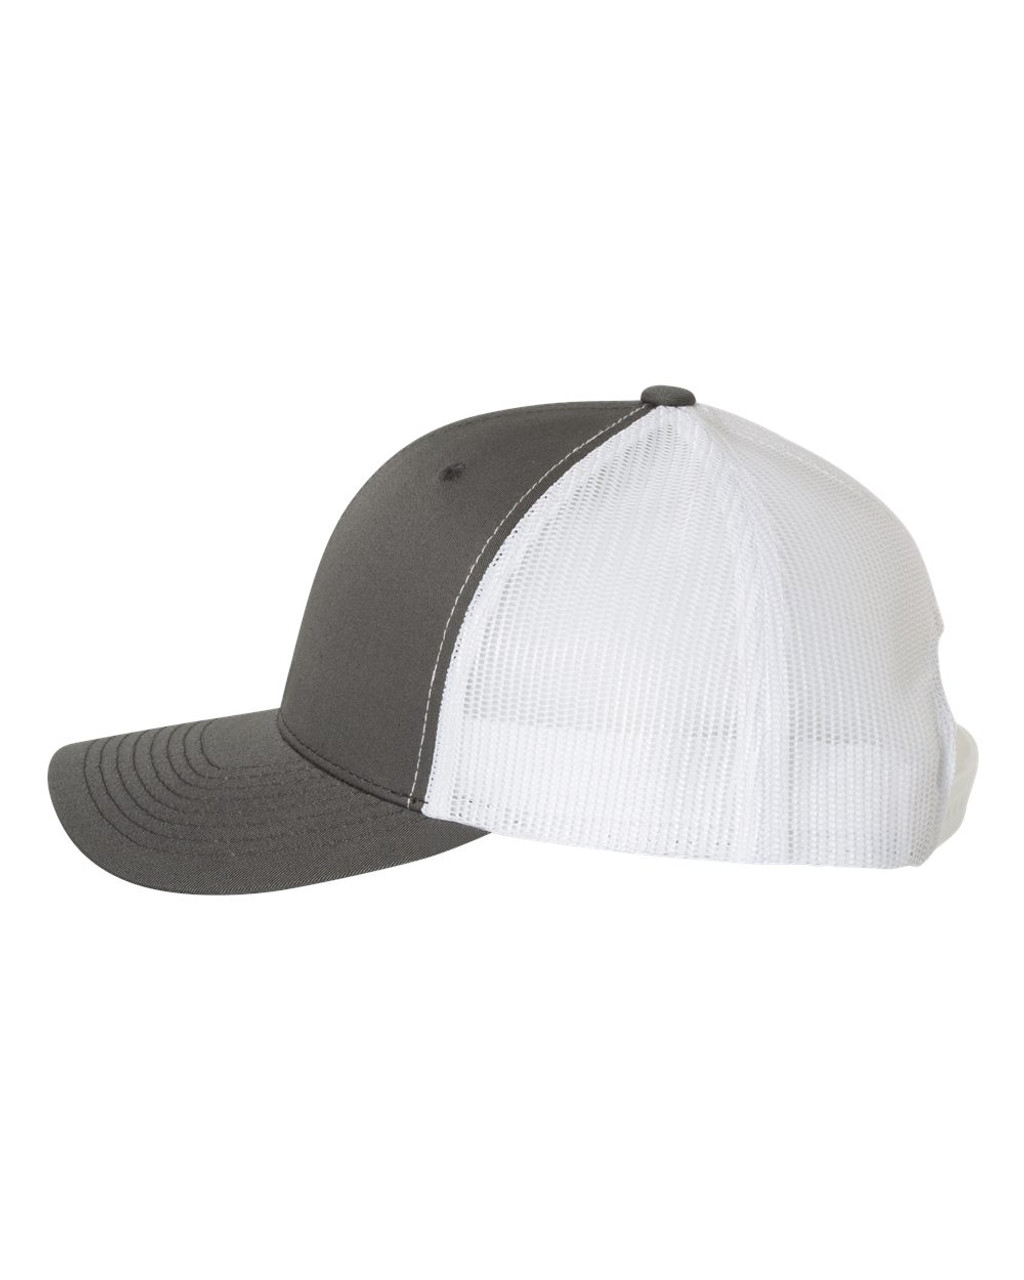 Star Force Order 66 AureBesh Font Heat Pressed Grey on White Curved Bill Hat - Adult Mesh Trucker Snap Back Cap